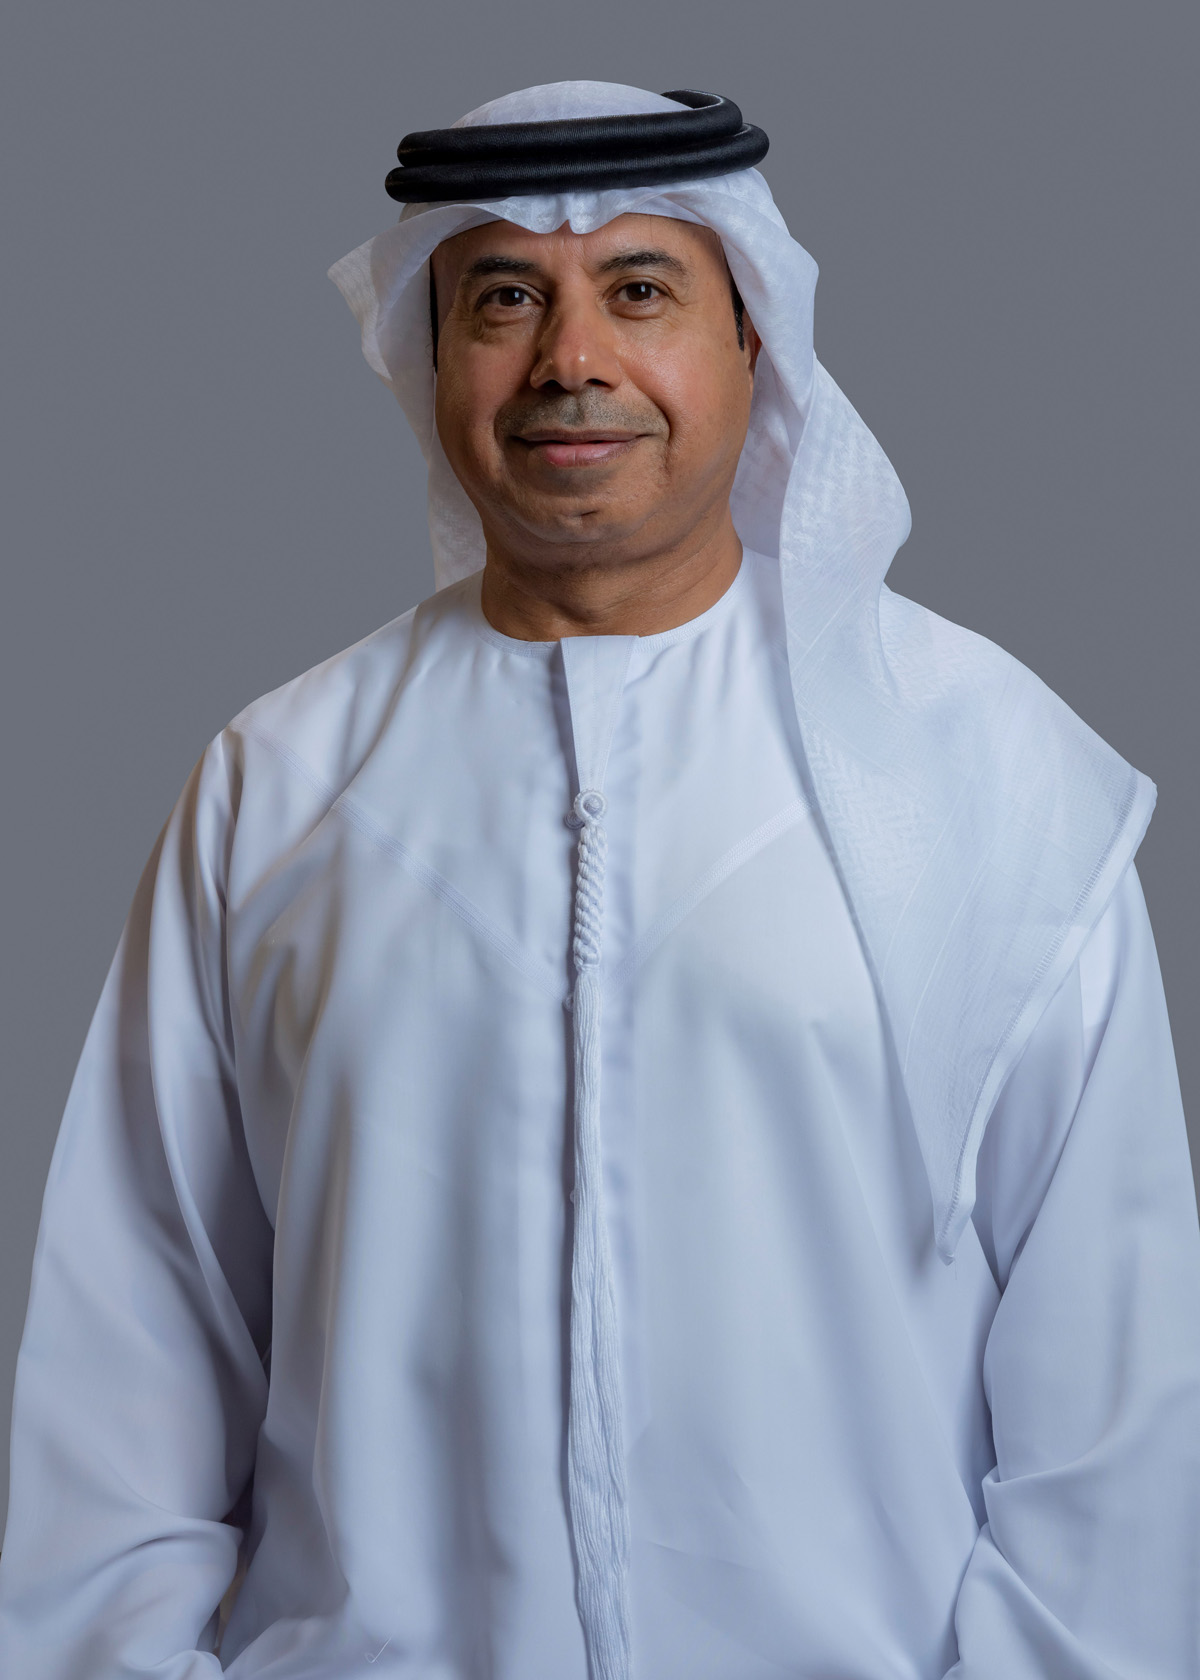 Dr. Sulaiman Rashed Al Nuaimi